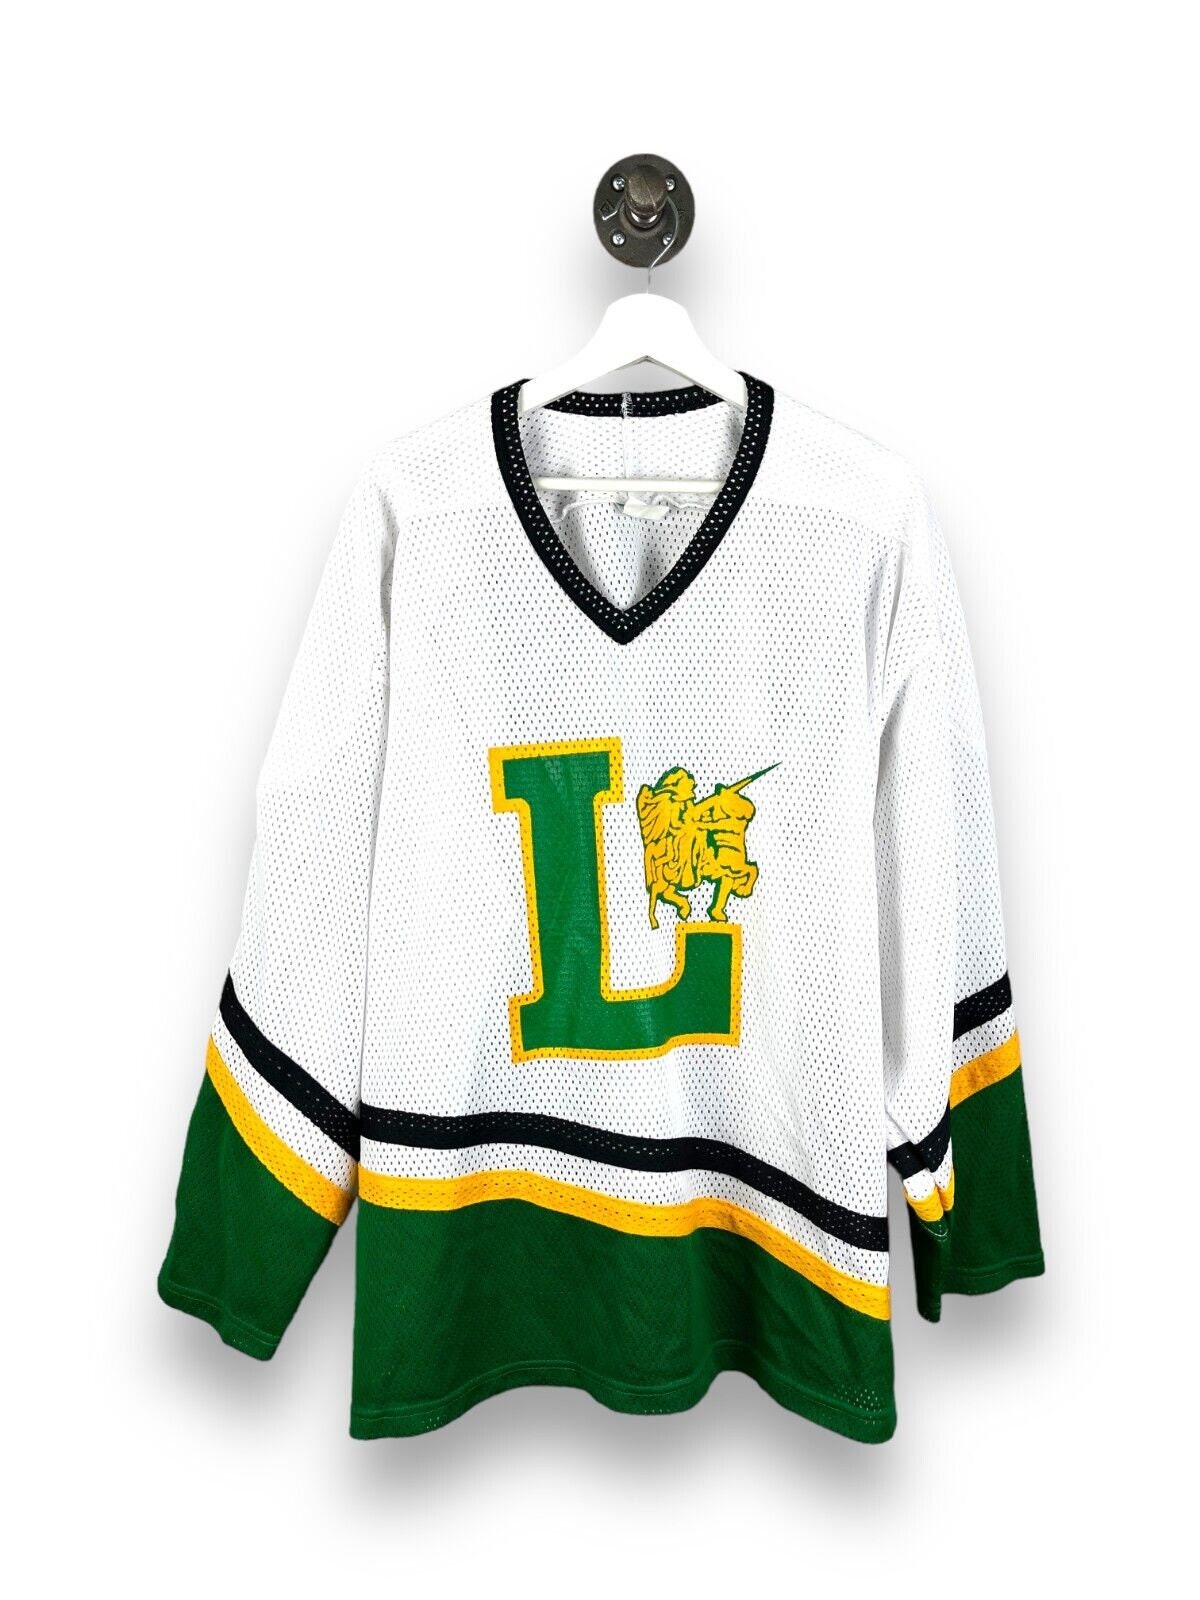 Vtg Minnesota Wild St Patricks Day Irish Lace Up NHL Hockey Hoodie  Sweatshirt L